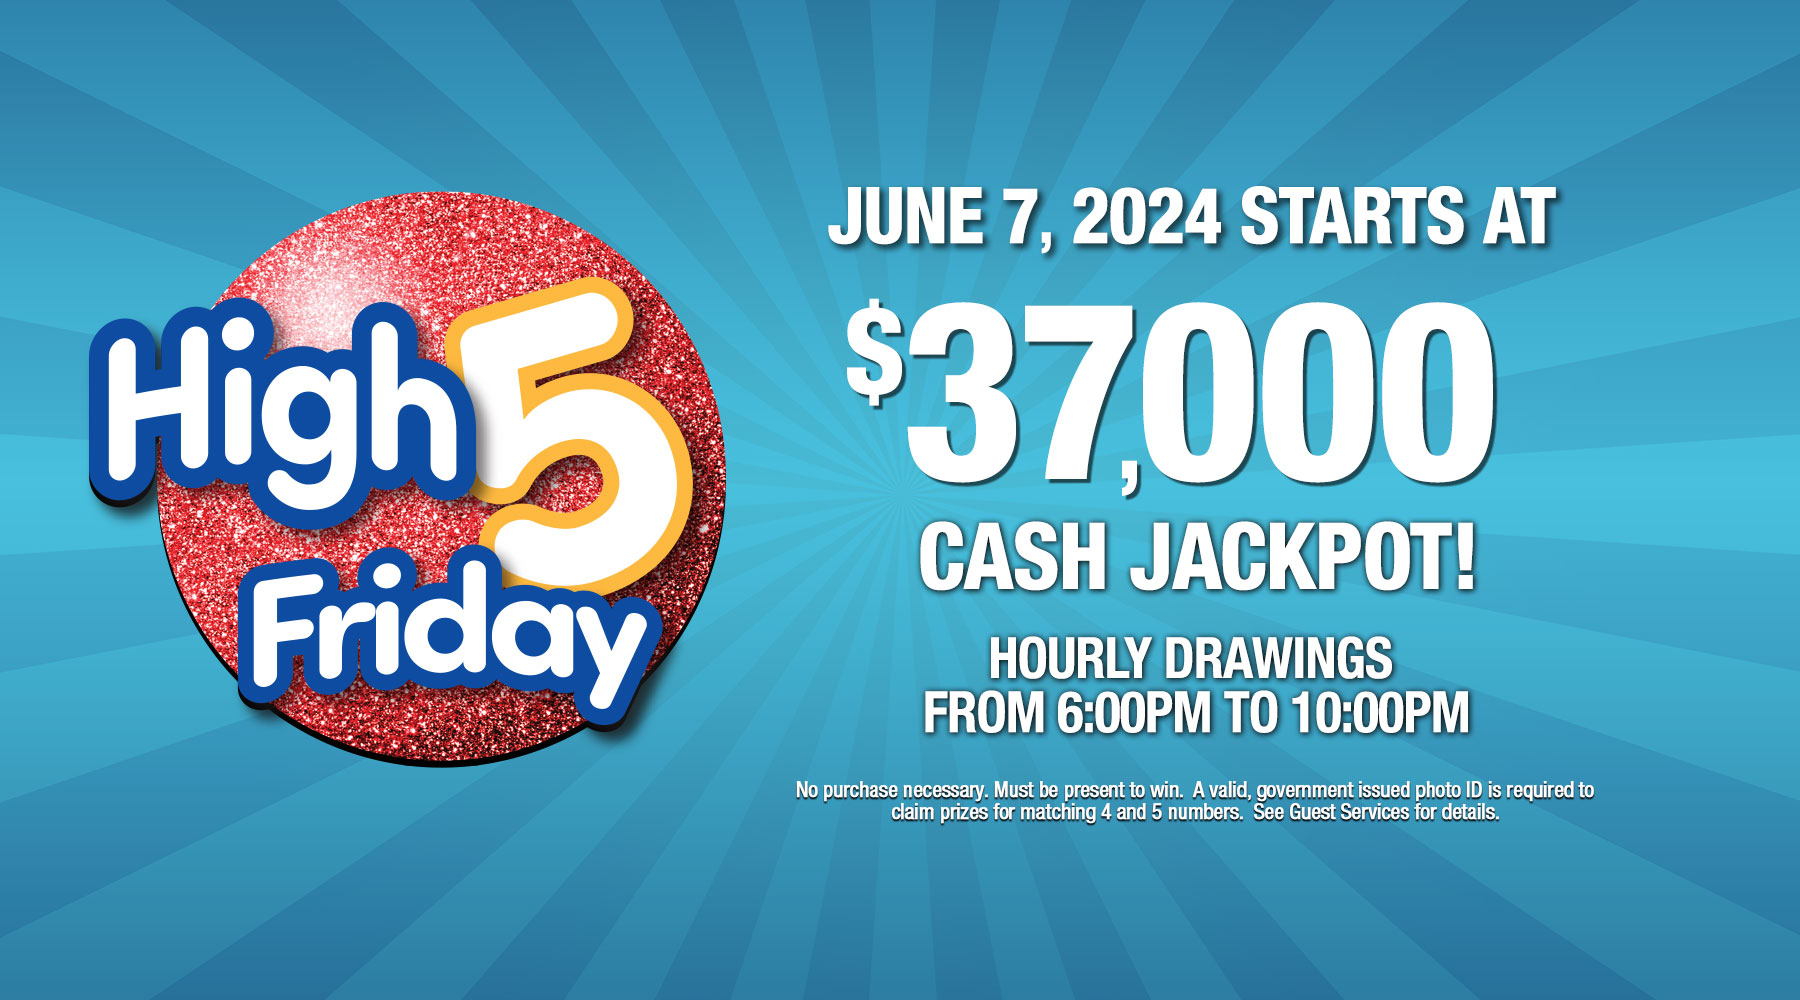 High 5 Friday CASH jackpot starts at $37,000 on June 7 2024